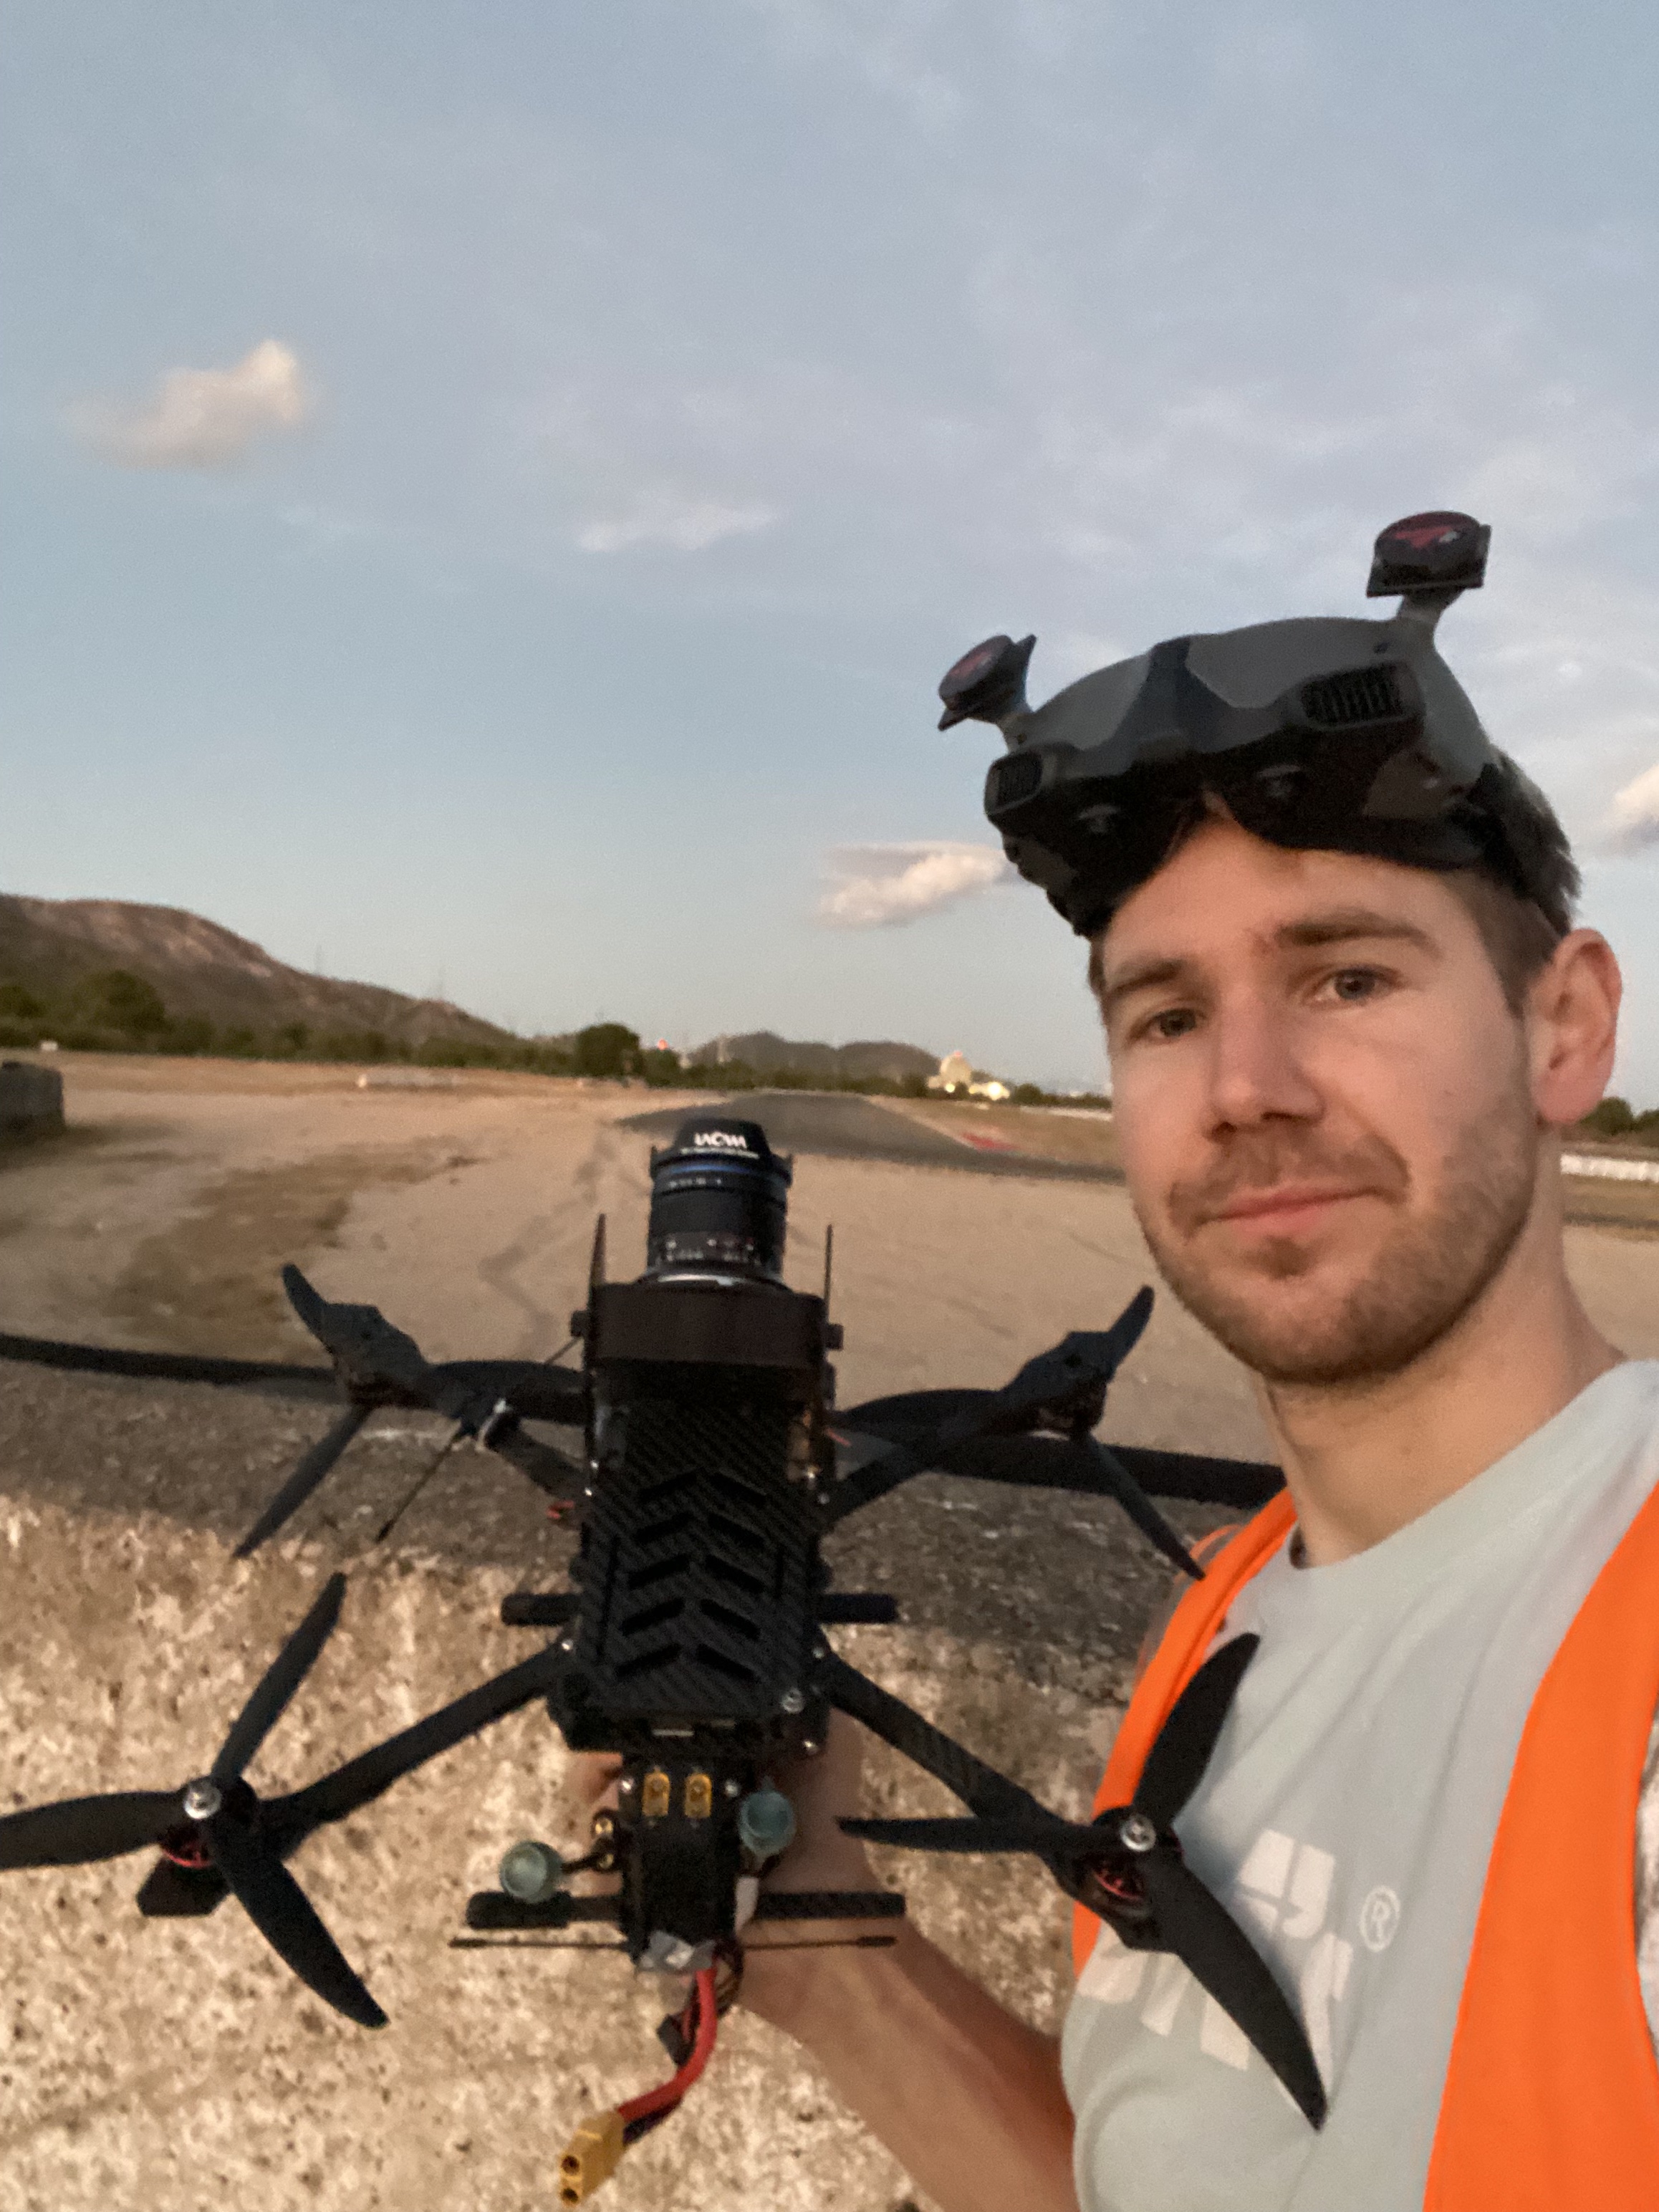 Drone pilot Ellis Van Jason shared behind the scenes advice